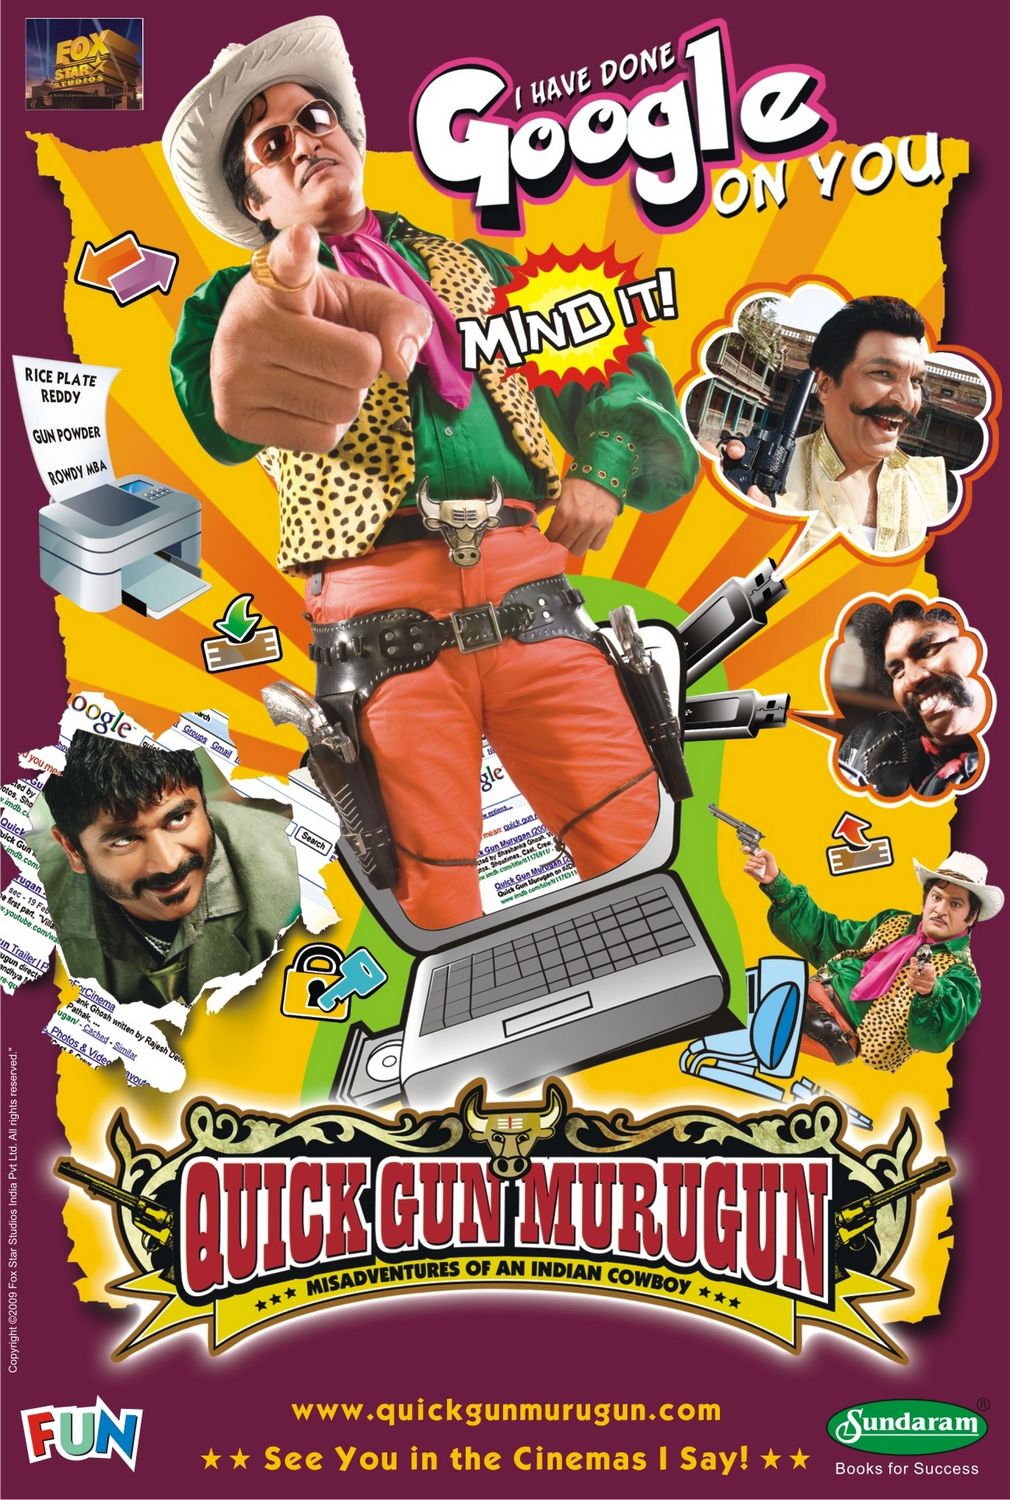 Extra Large Movie Poster Image for Quick Gun Murugun (#8 of 8)